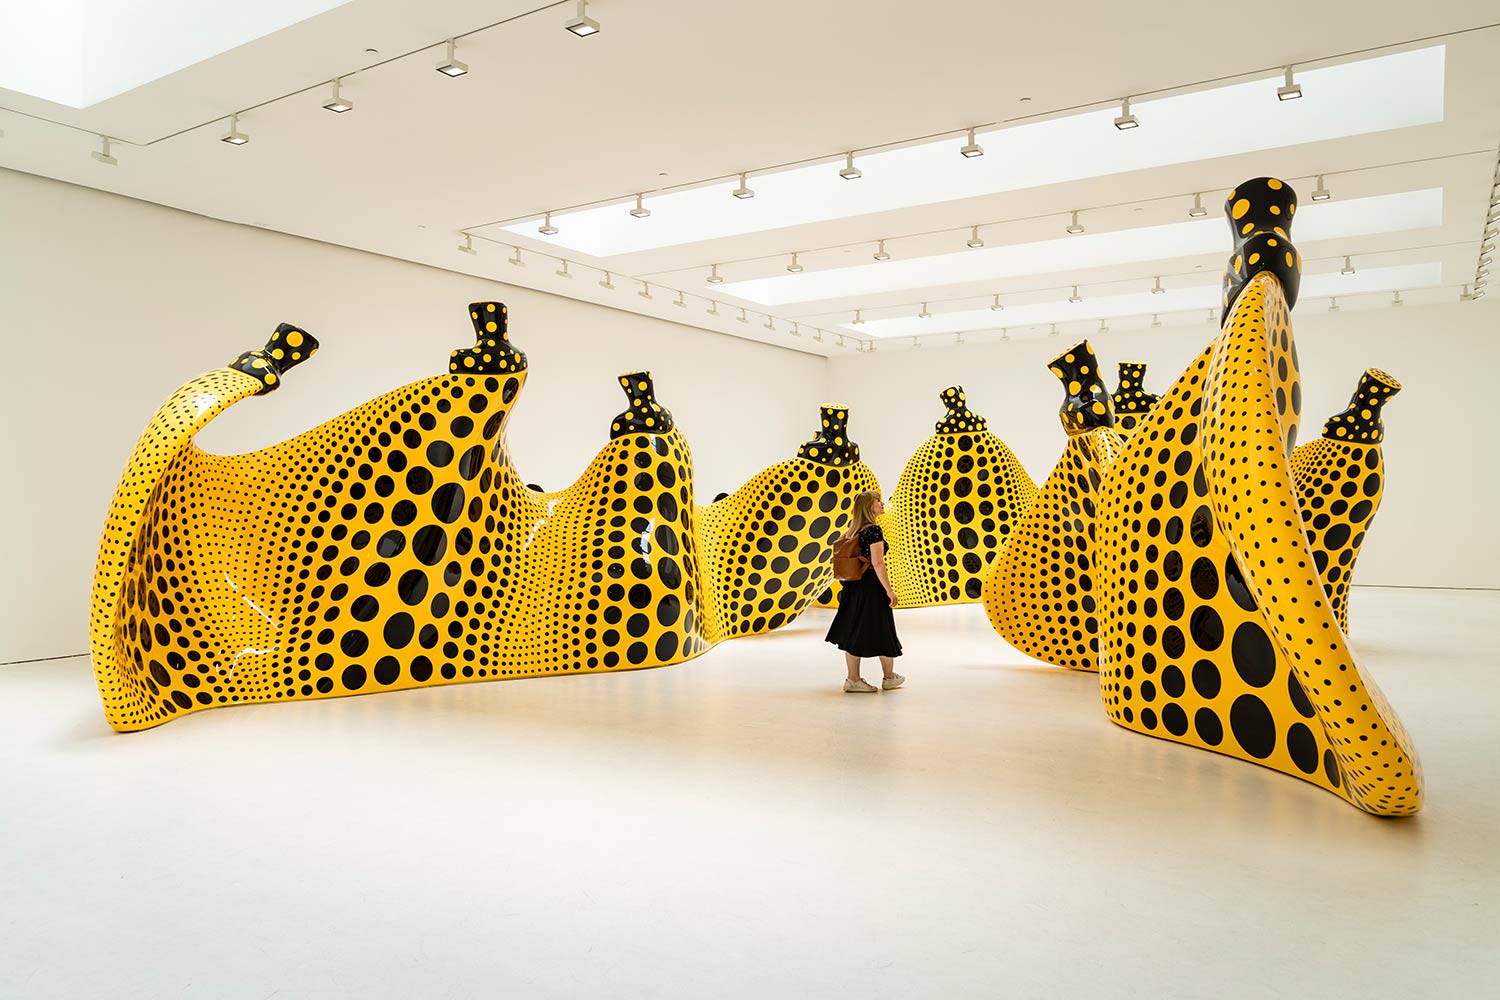 Bananes, Yayoi Kusama, Galerie David Zwirner, New York, Manhattan, États-Unis / Banana, David Zwirner Gallery, New York, NYC, USA